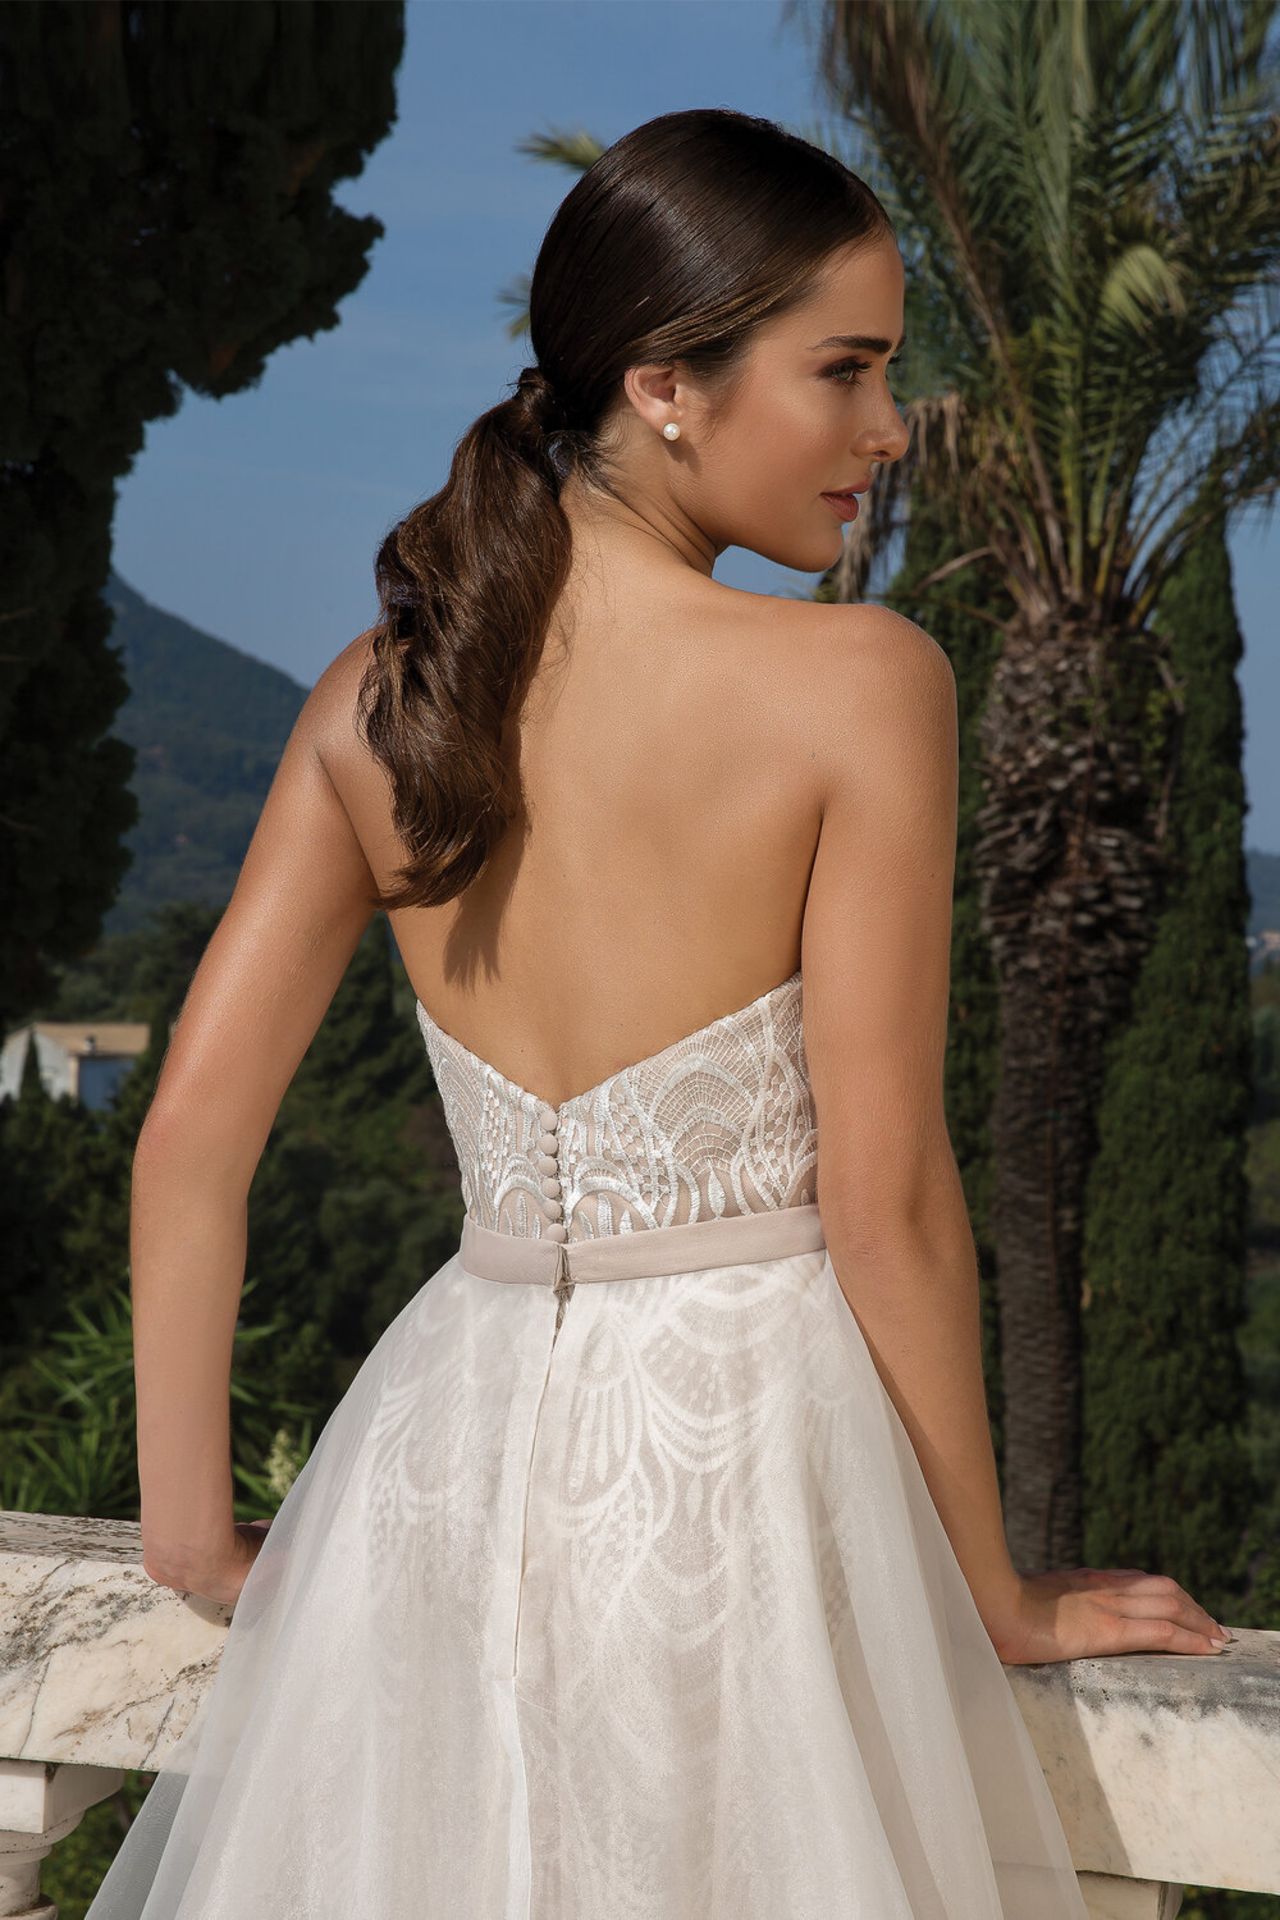 1 x Justin Alexander Designer Allover Lace Wedding With Sequined Neckline - UK Size 12 - RRP £1,595 - Image 9 of 9